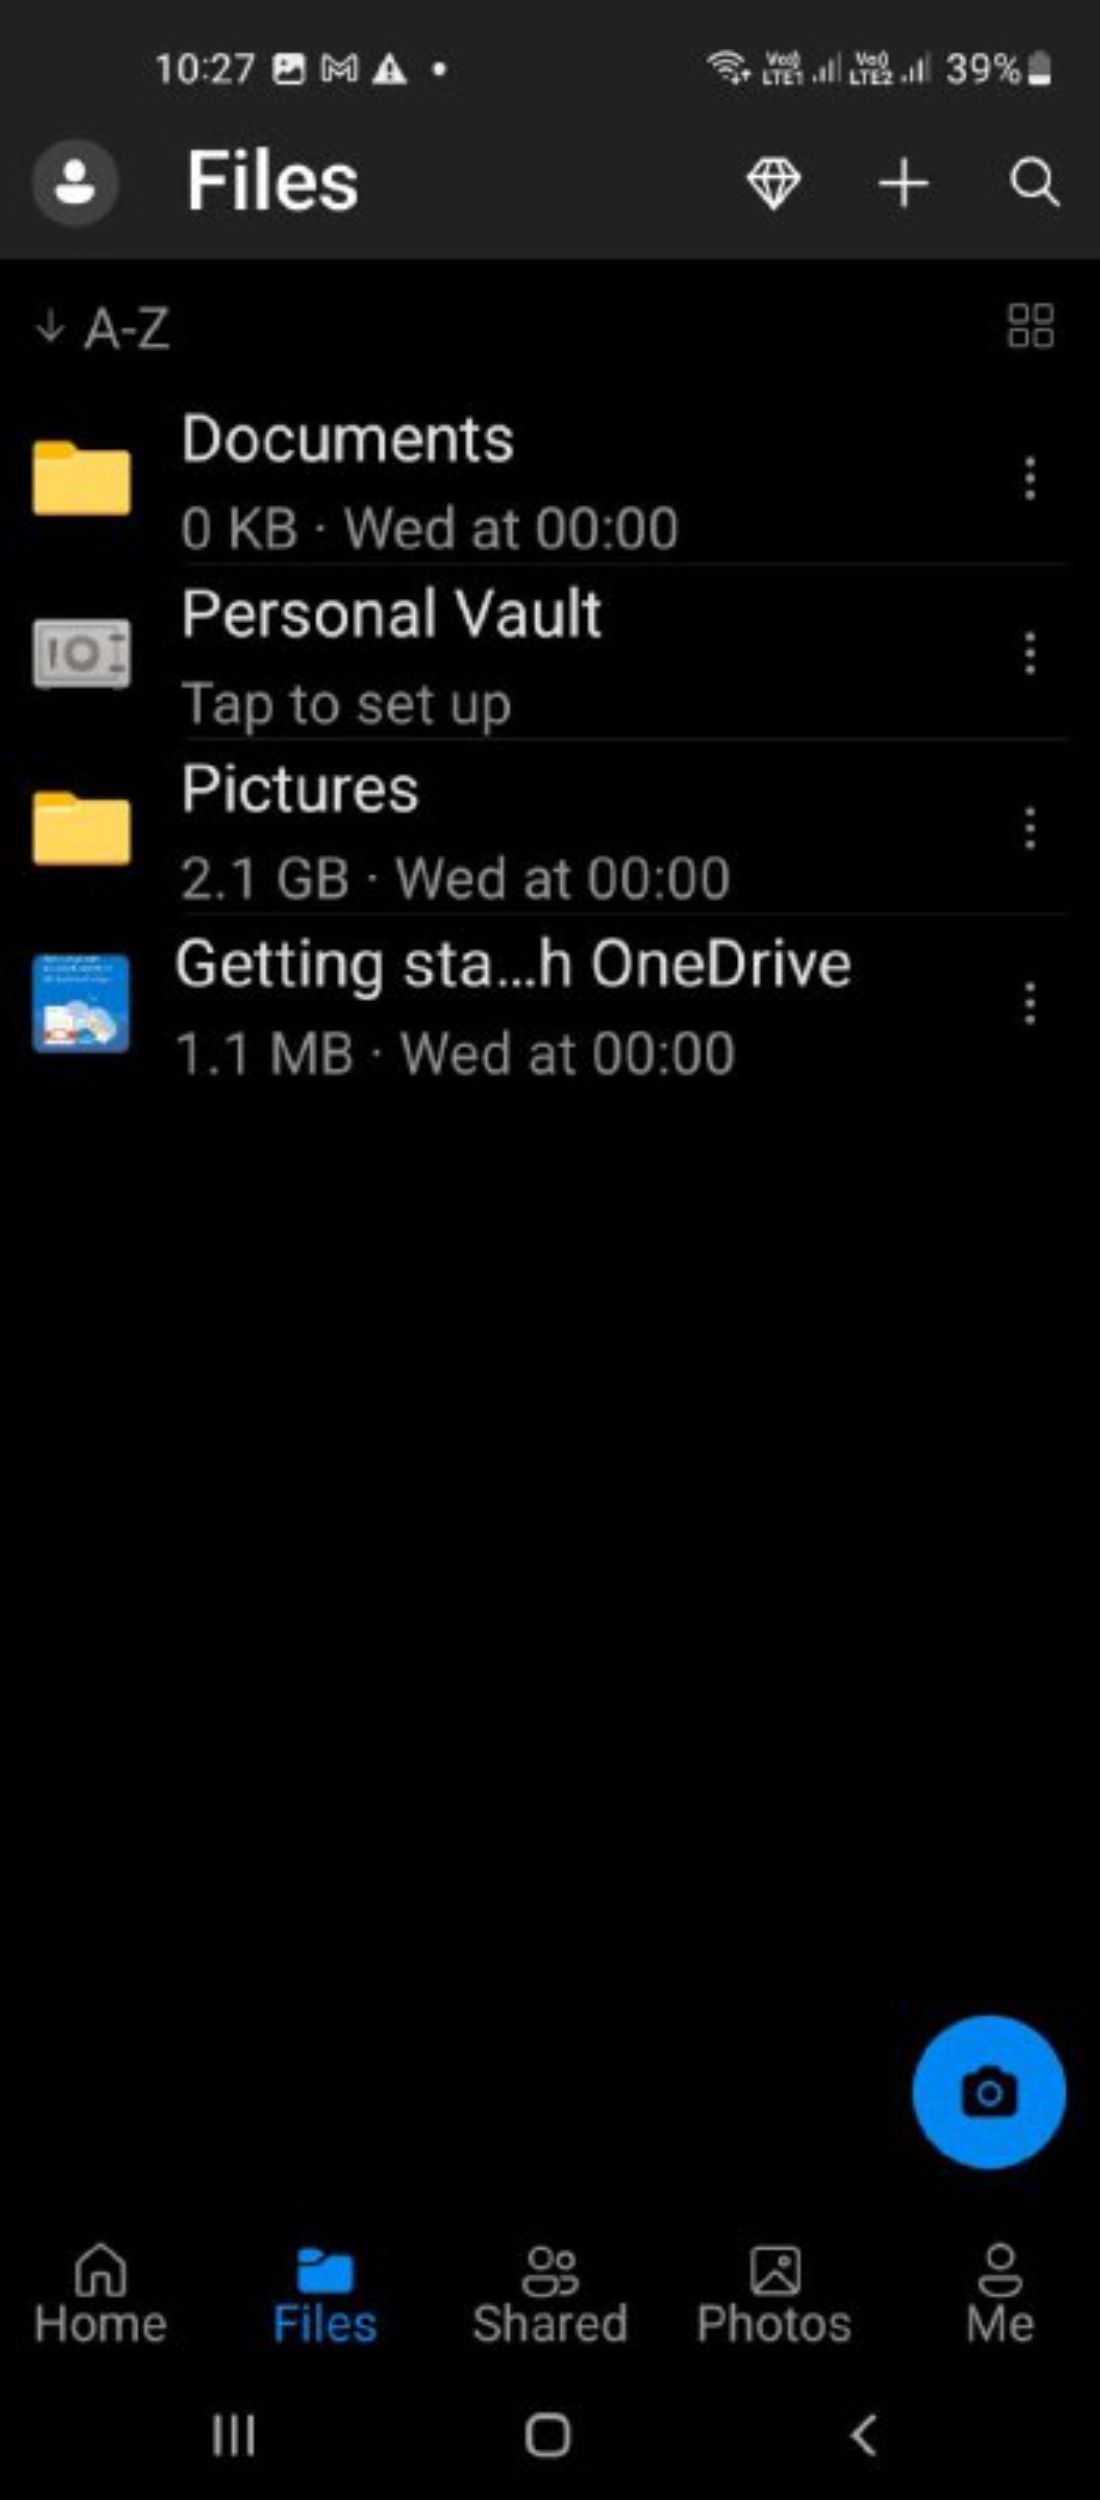 Files and folders in Microsoft OneDrive